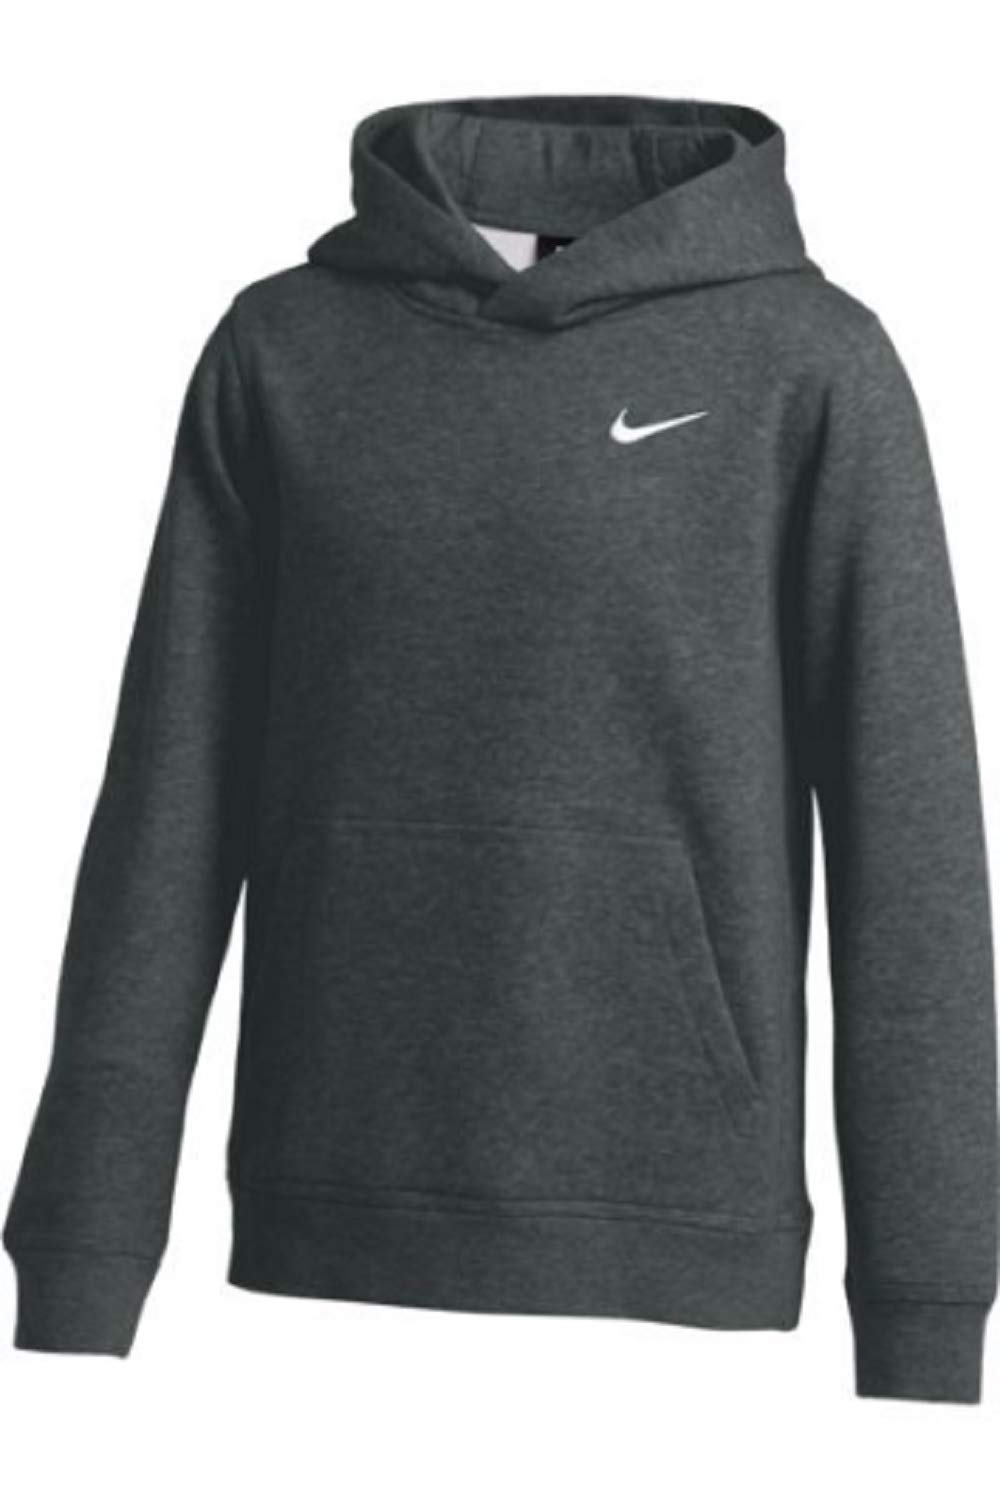 Nike Youth Fleece Pullover Hoodie